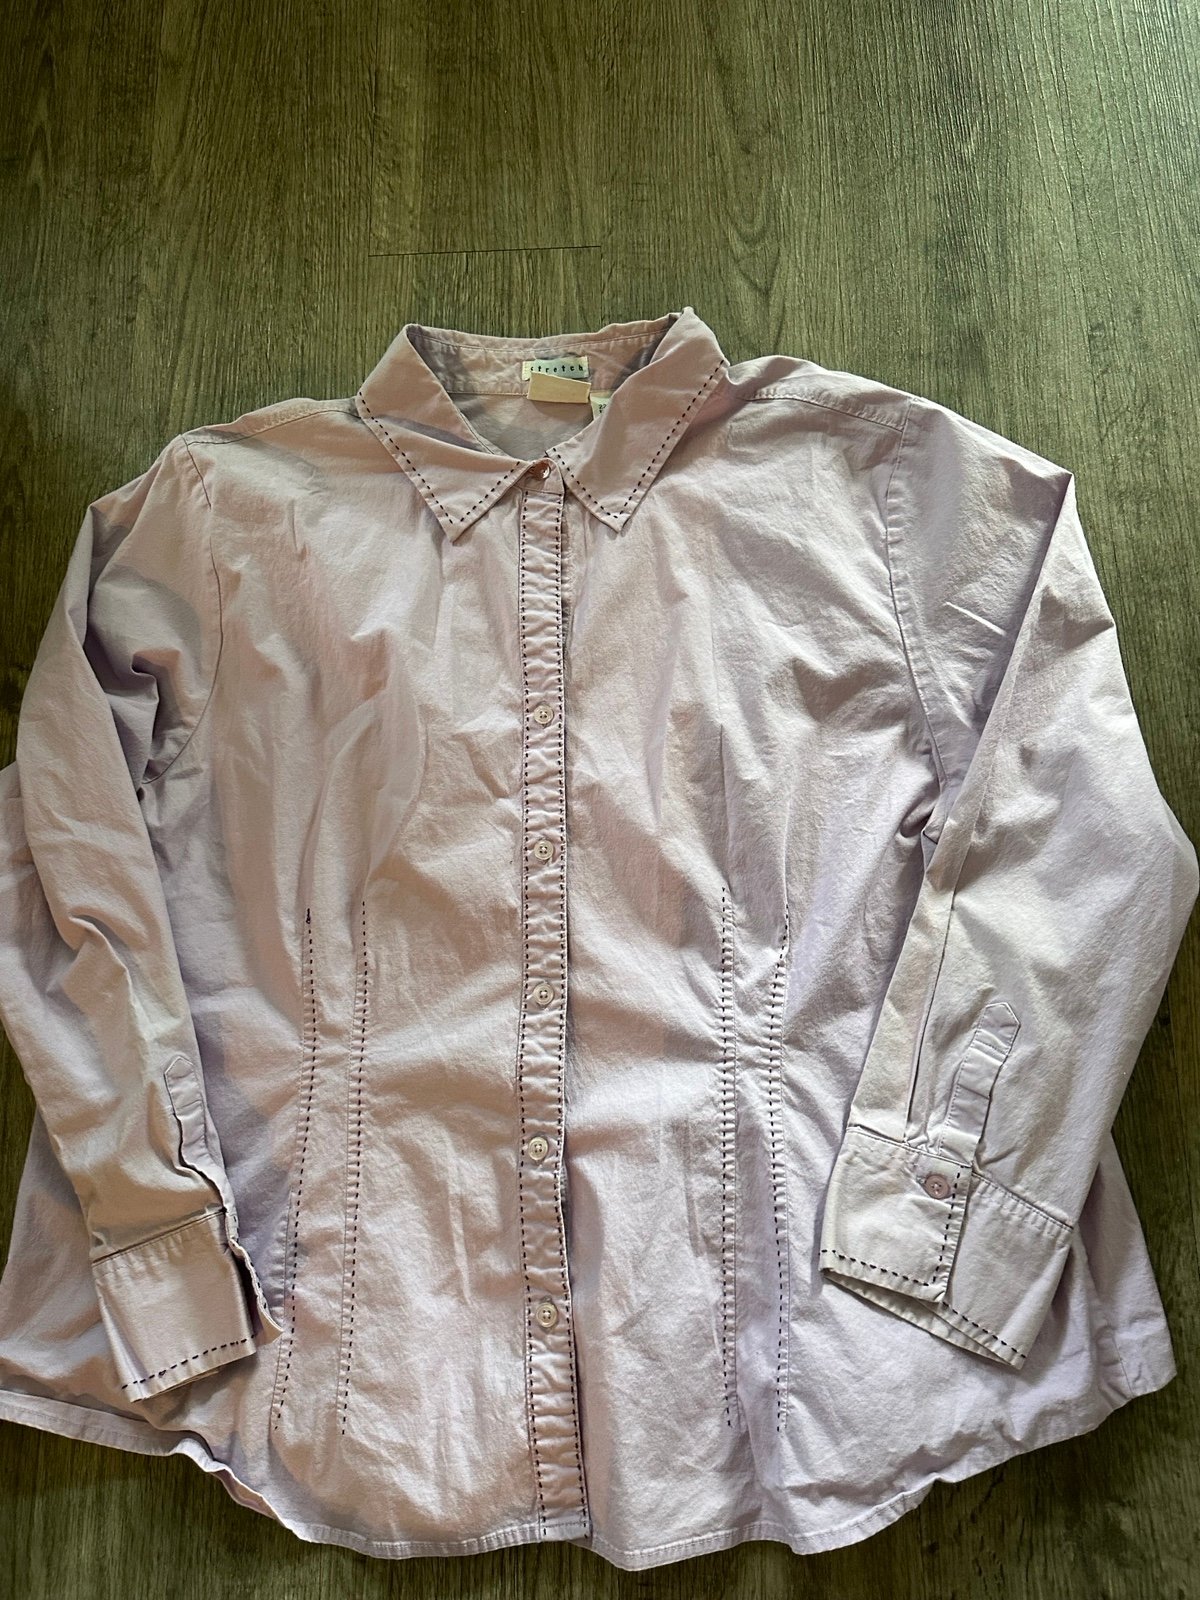 High quality Button Down Shirt Carolina Colors Long Sleeve 22/24 FvfjY59vq Zero Profit 